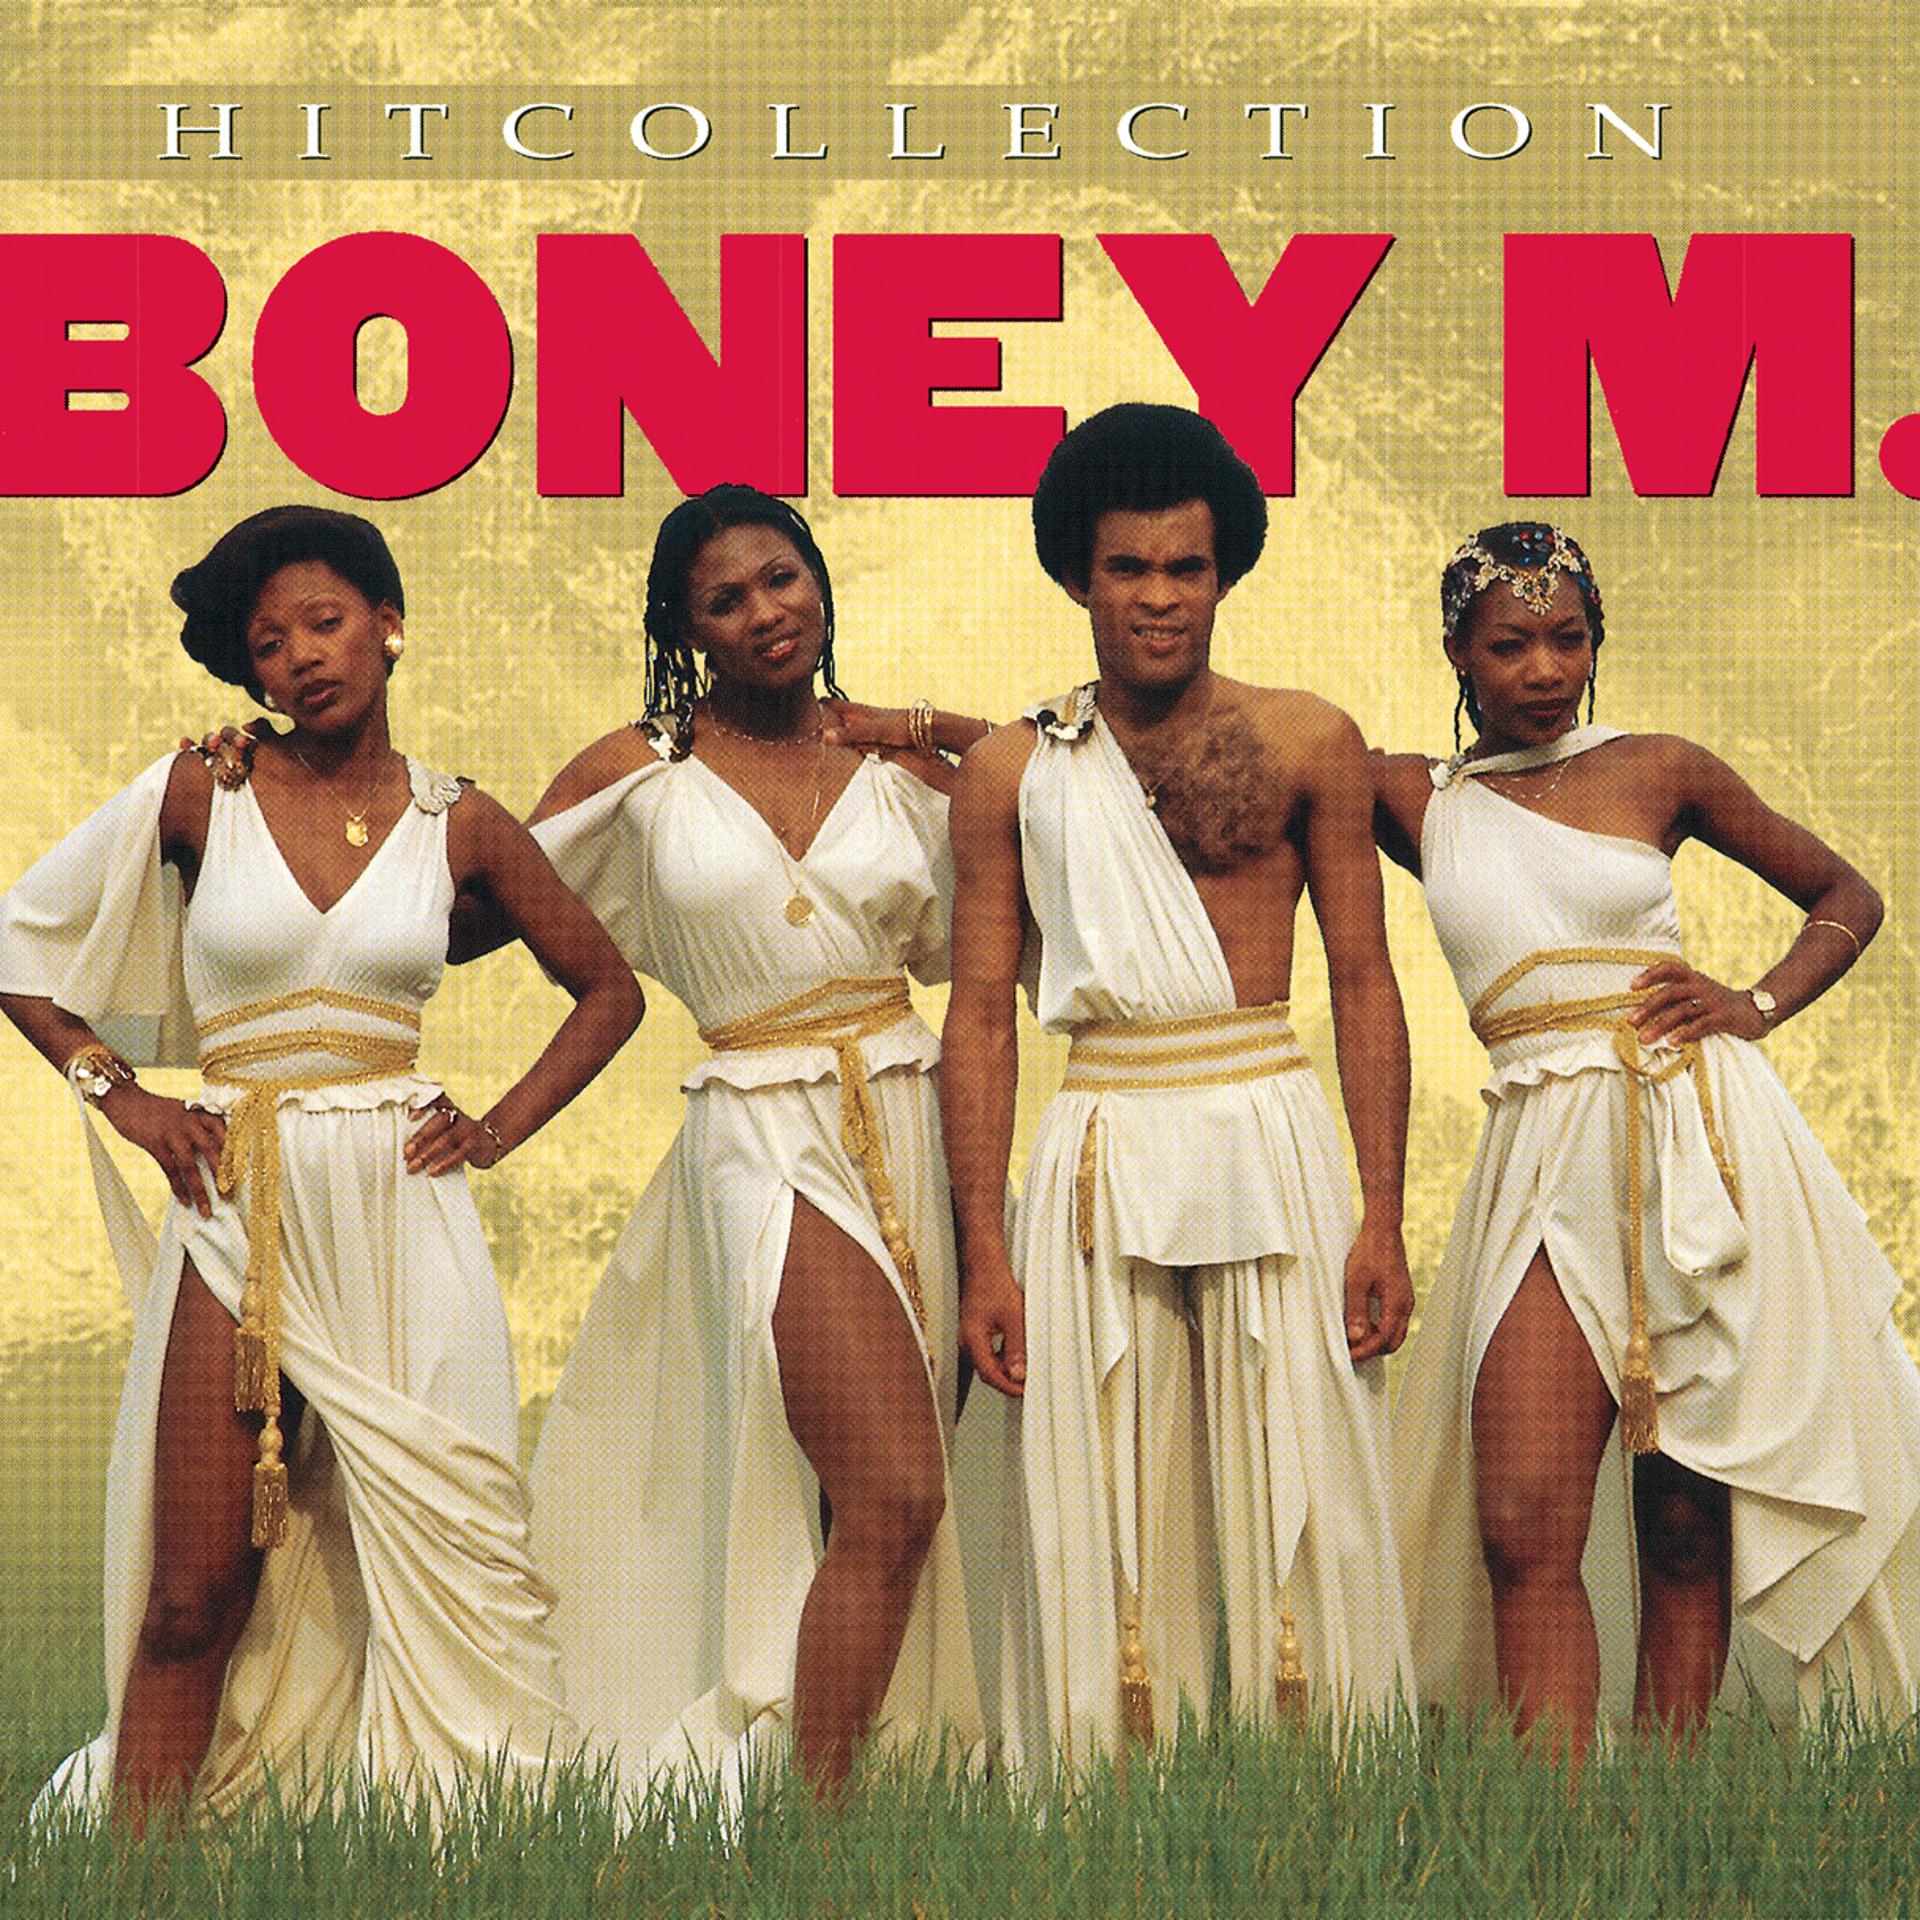 Boney m home. Группа Boney m.. Группа Boney m. в 80. Бони м ма Бейкер. Группа Бони м 1976.